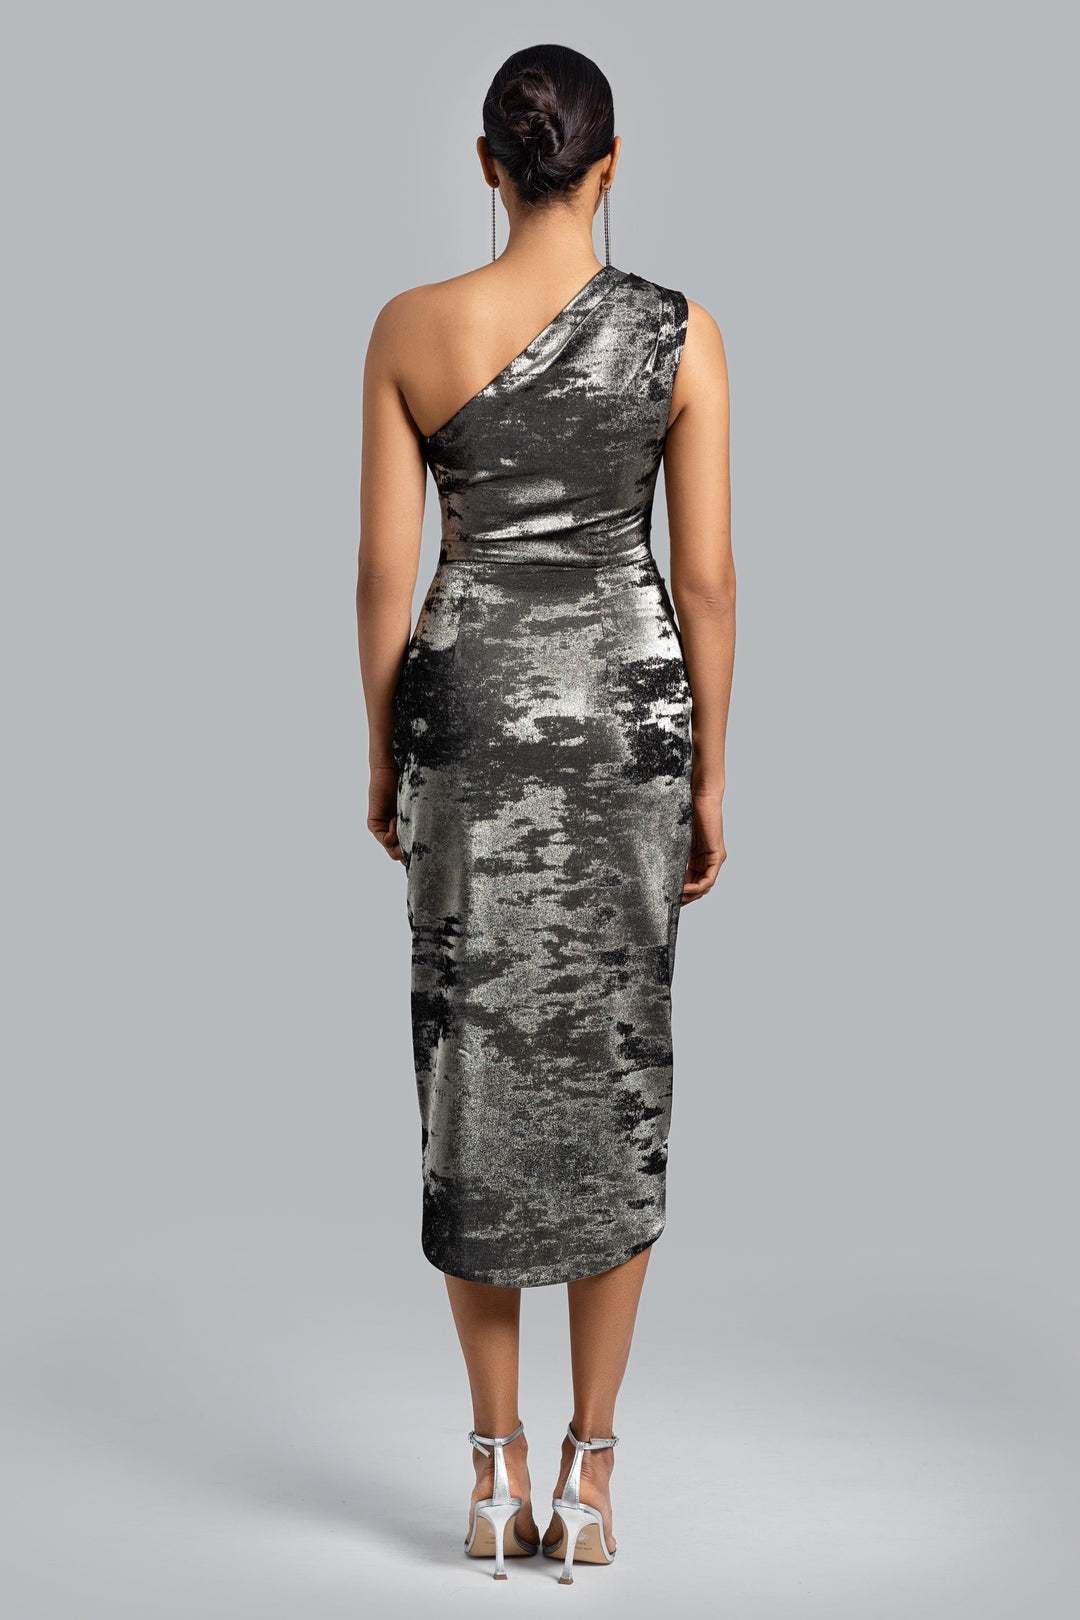 GHRAIL "Lenox" Metallic Crepe Dress